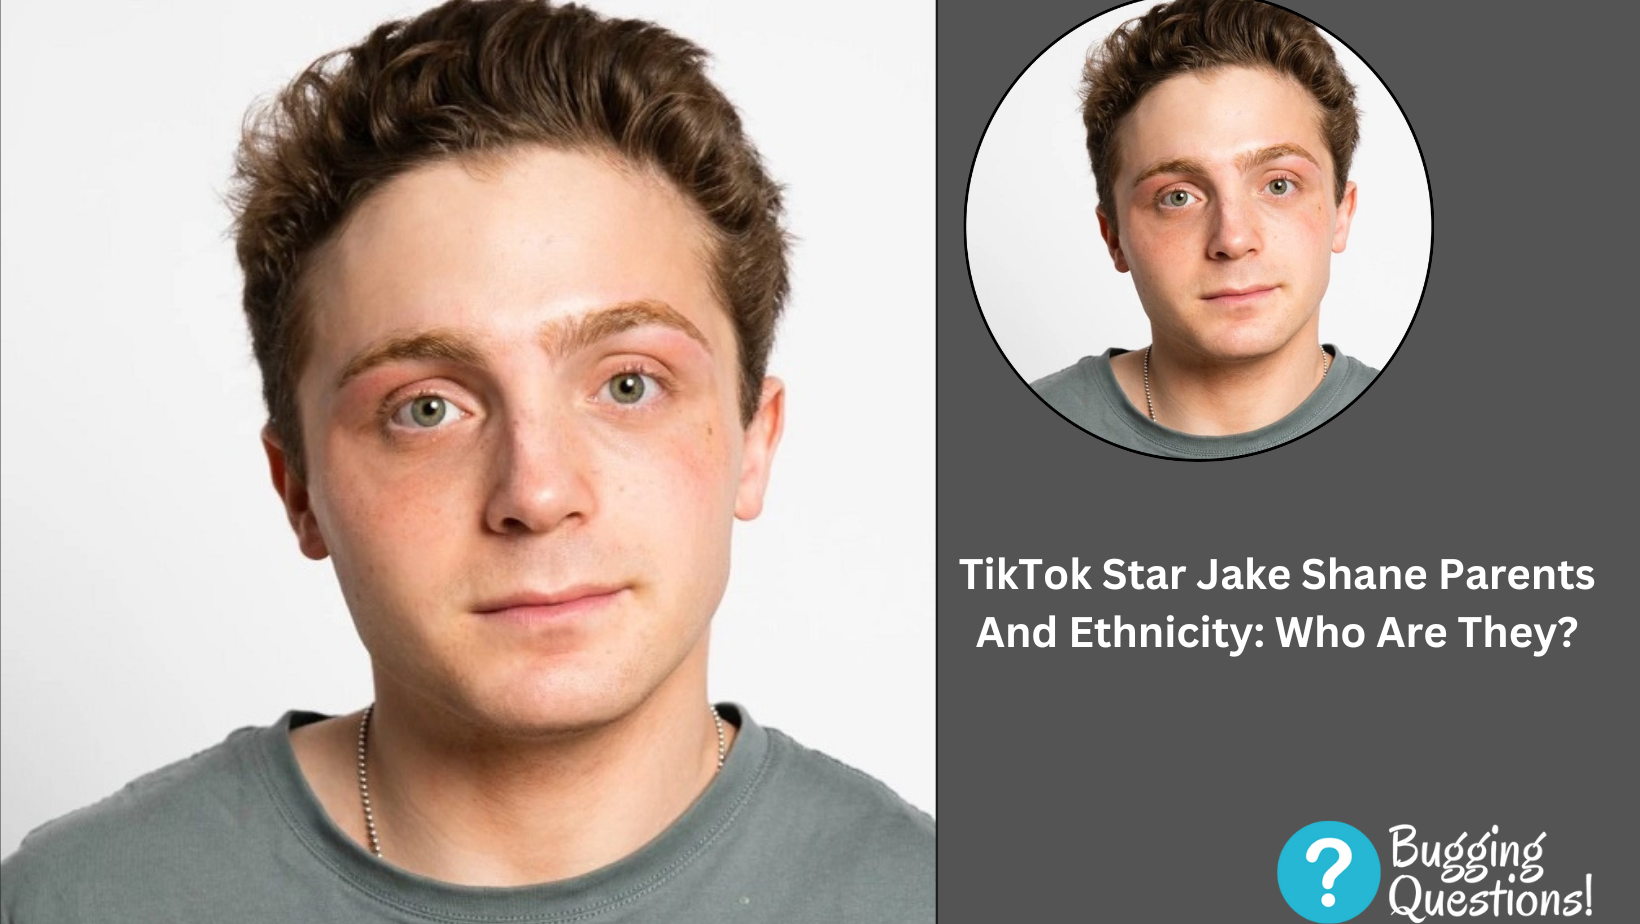 TikTok Star Jake Shane Parents And Ethnicity